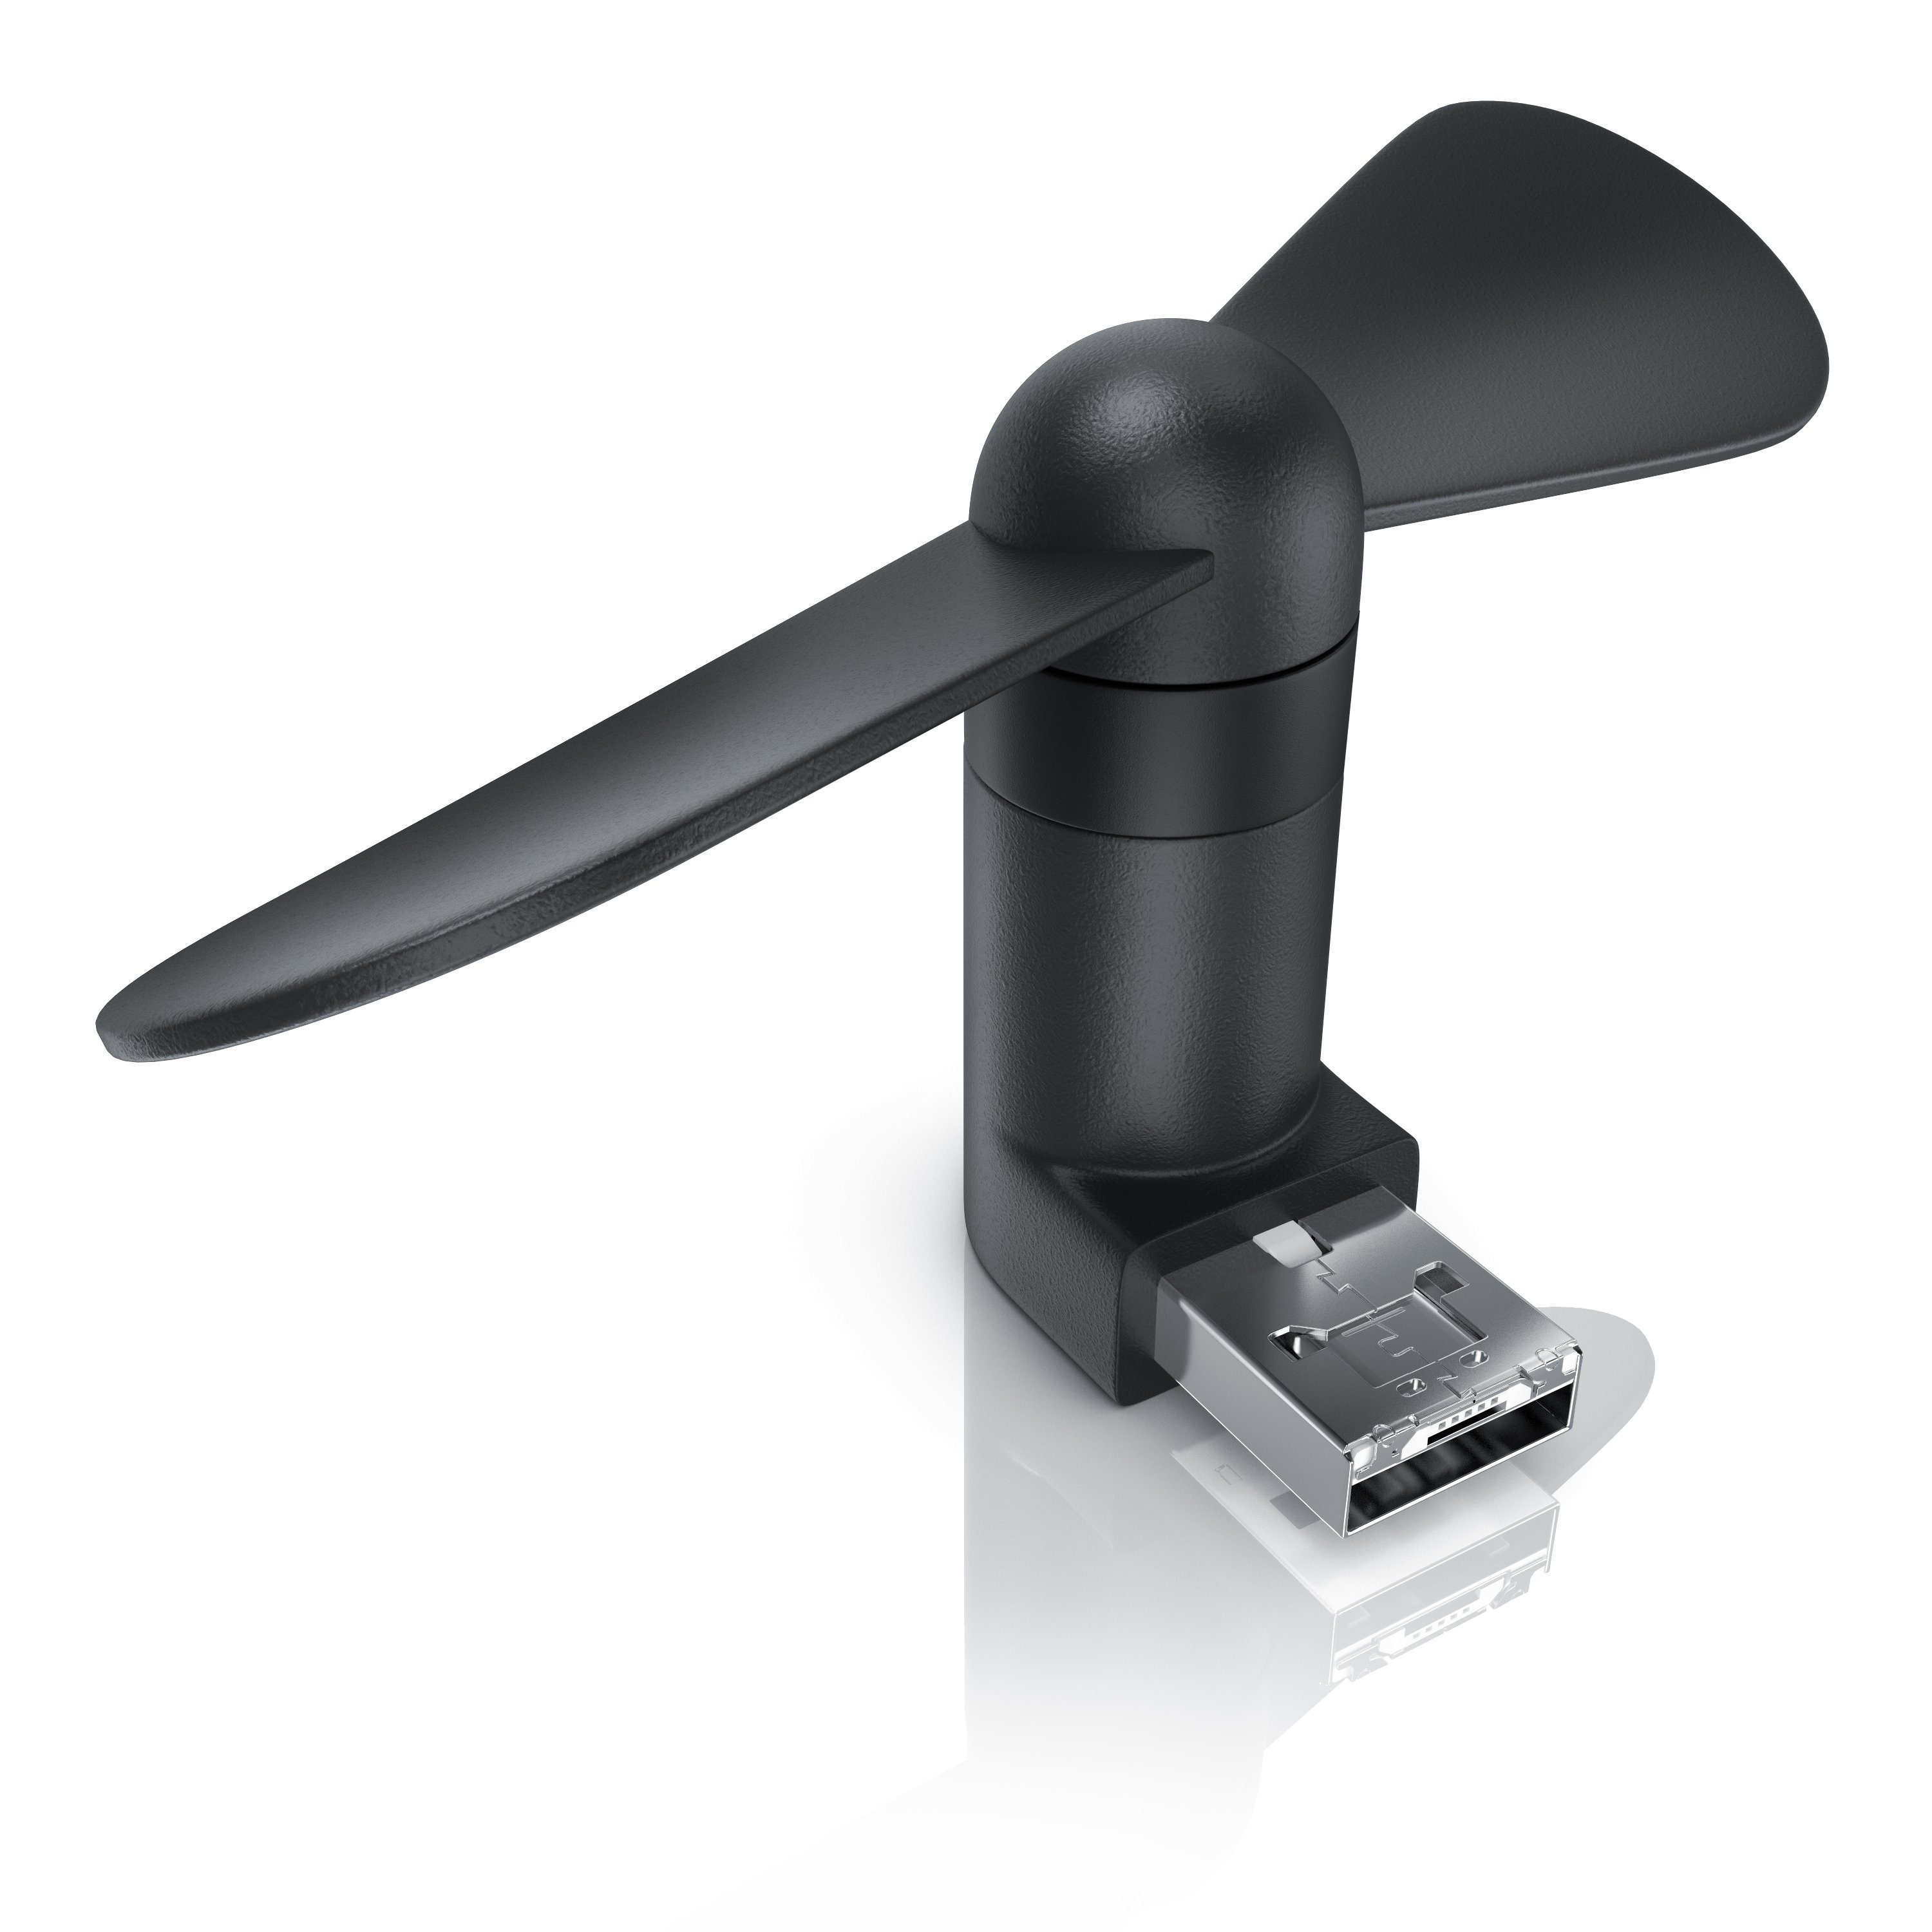 für USB USB-Ventilator, Powerbank, PC Handy, Aplic microUSB & Smartphone, Anschluss etc. Mini schwarz